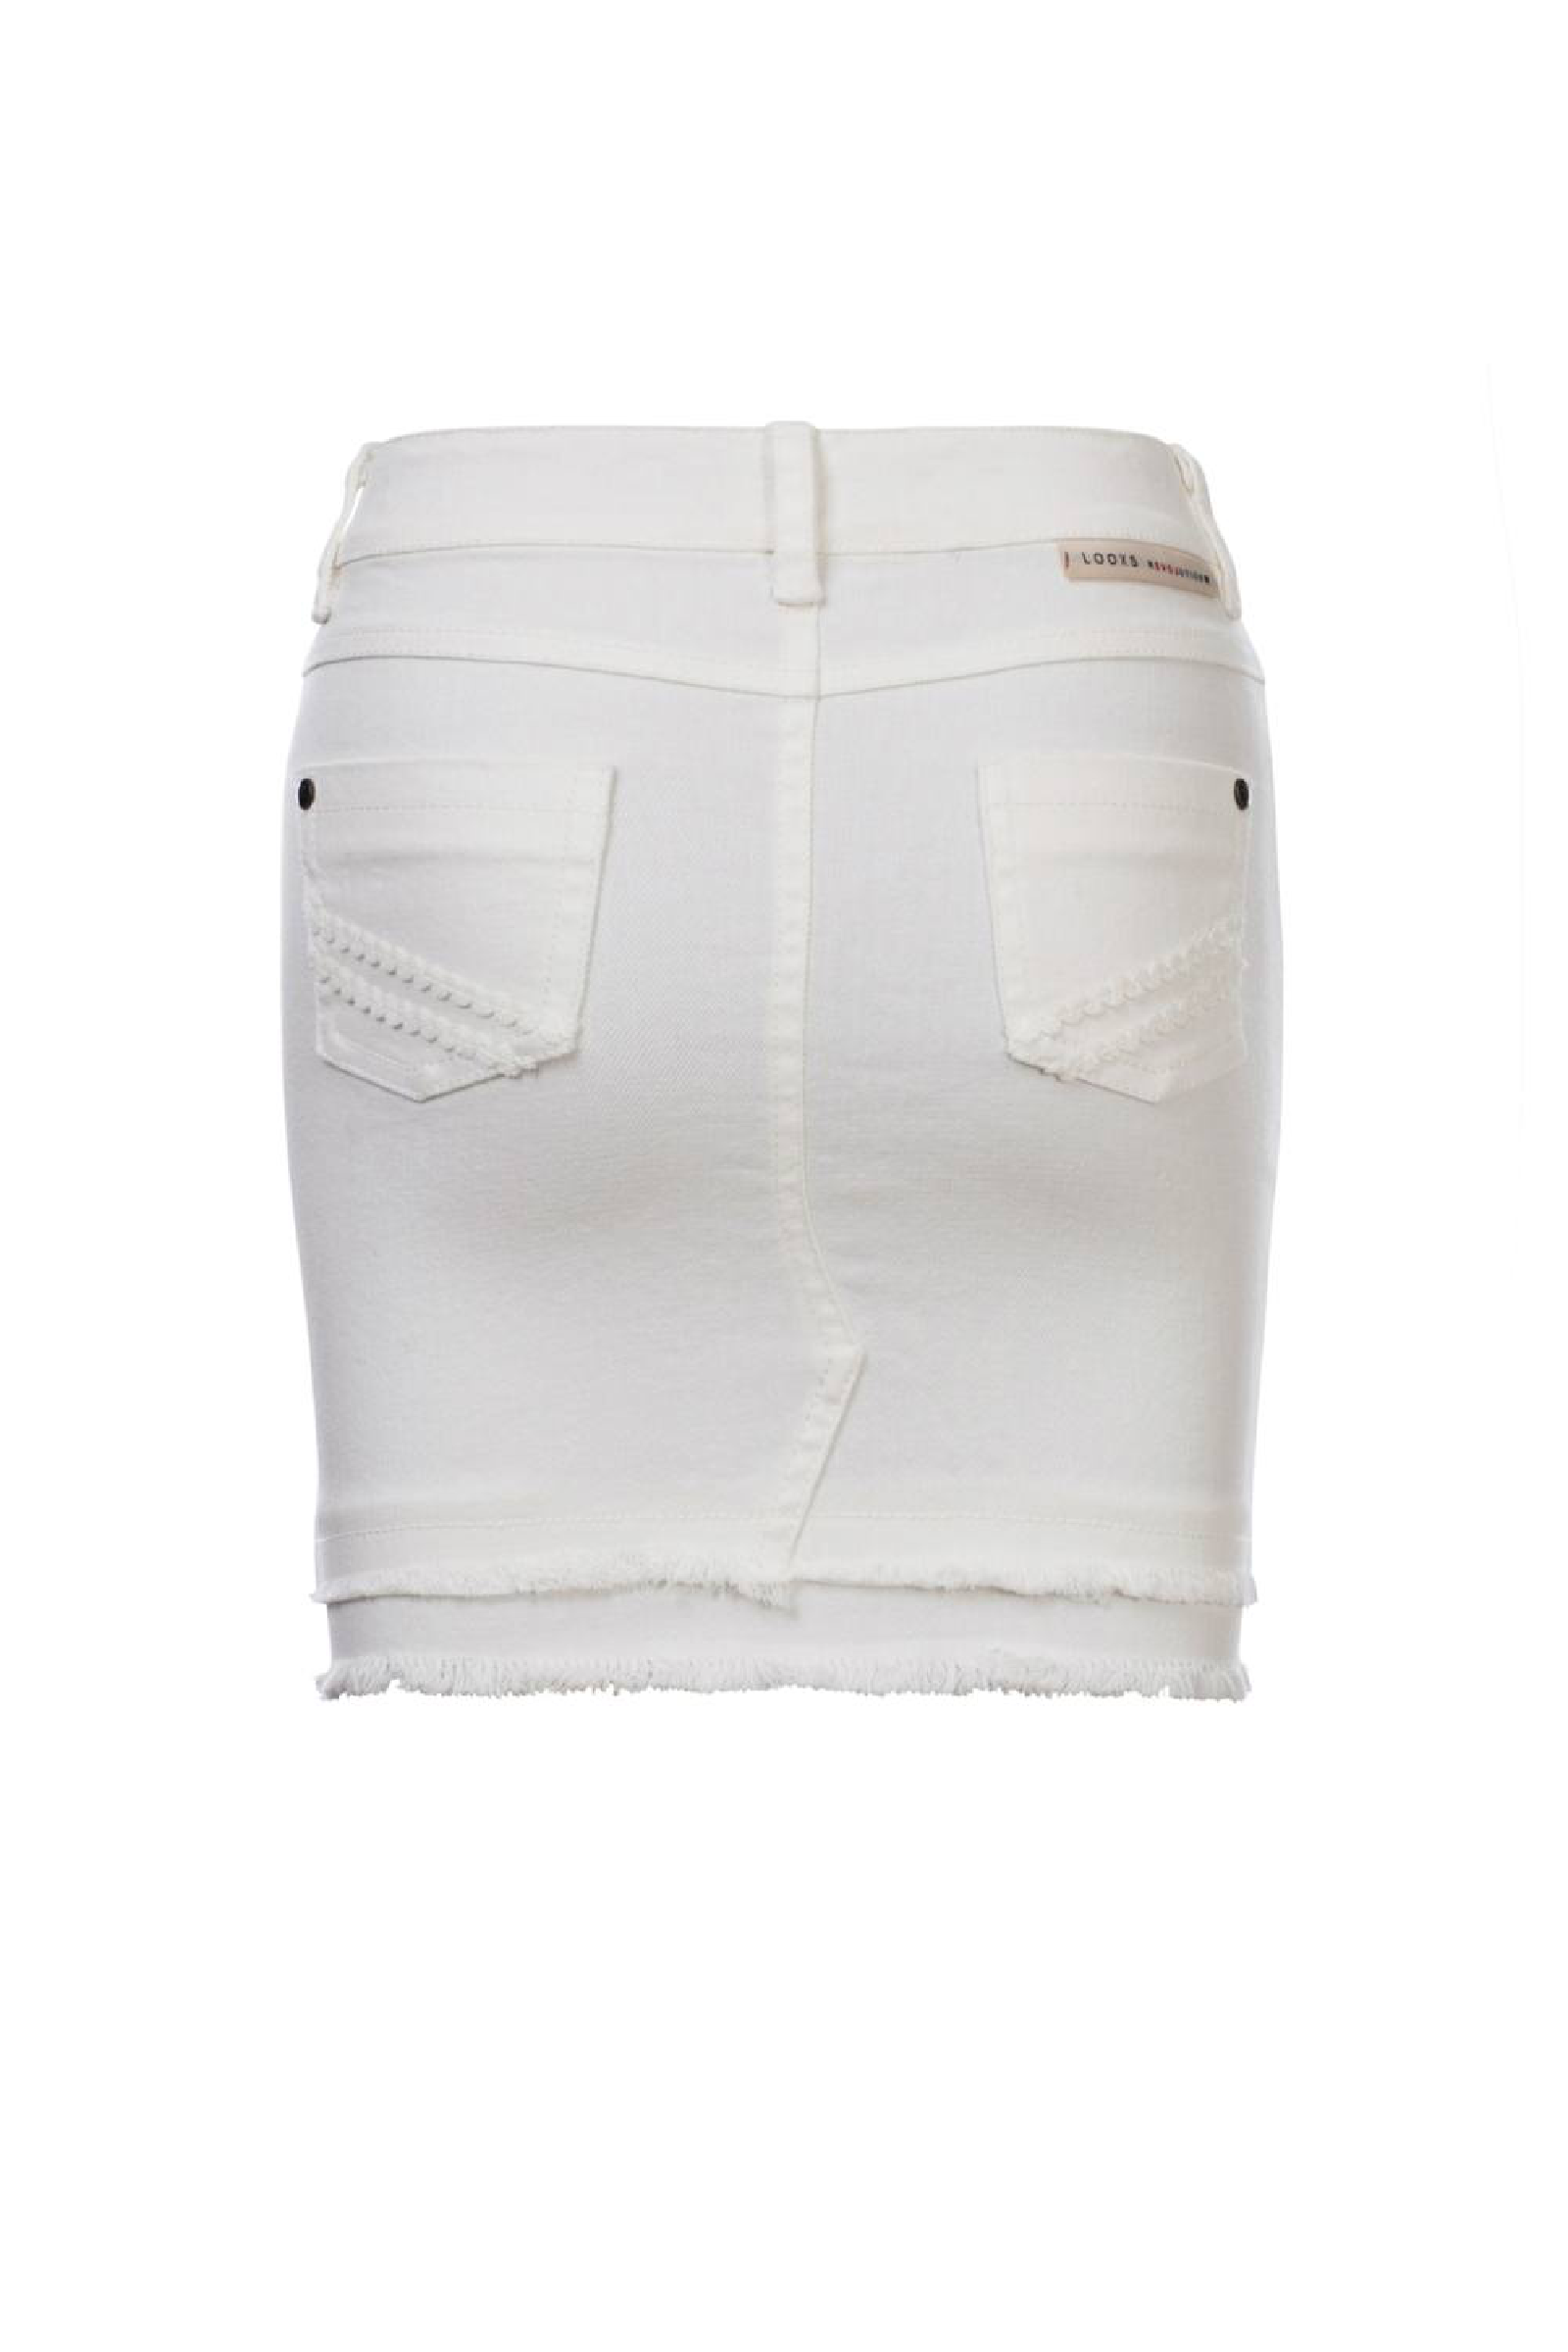 Meisjes Girls white denim skirt van Looxs Revol. in de kleur Off White in maat 164.